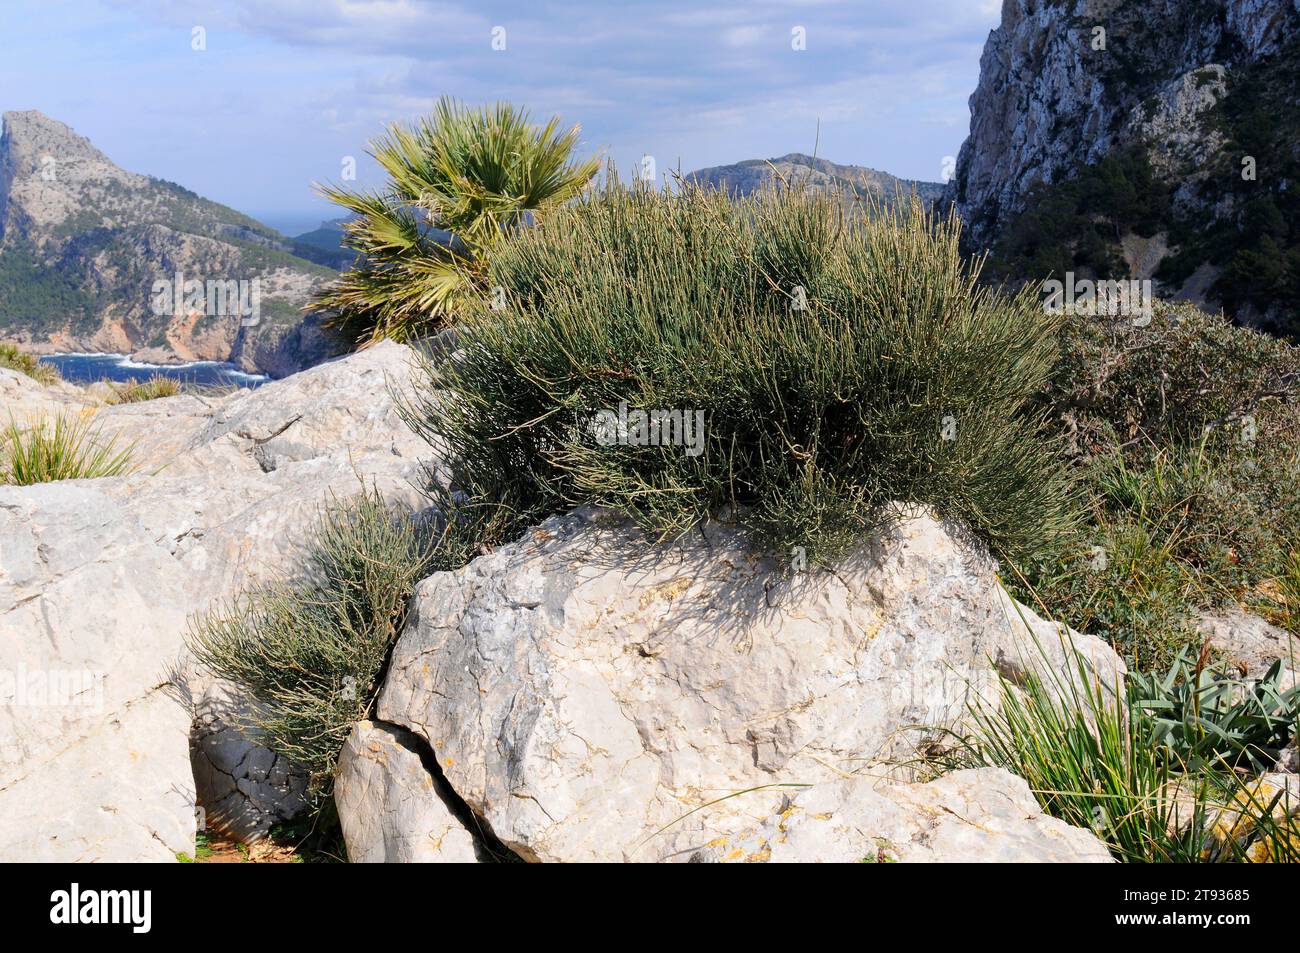 Joint pine (Ephedra fragilis) is a toxic shrub native to west Mediterranean region. This photo was taken in Mallorca island, Balearic Islands, Spain. Stock Photo